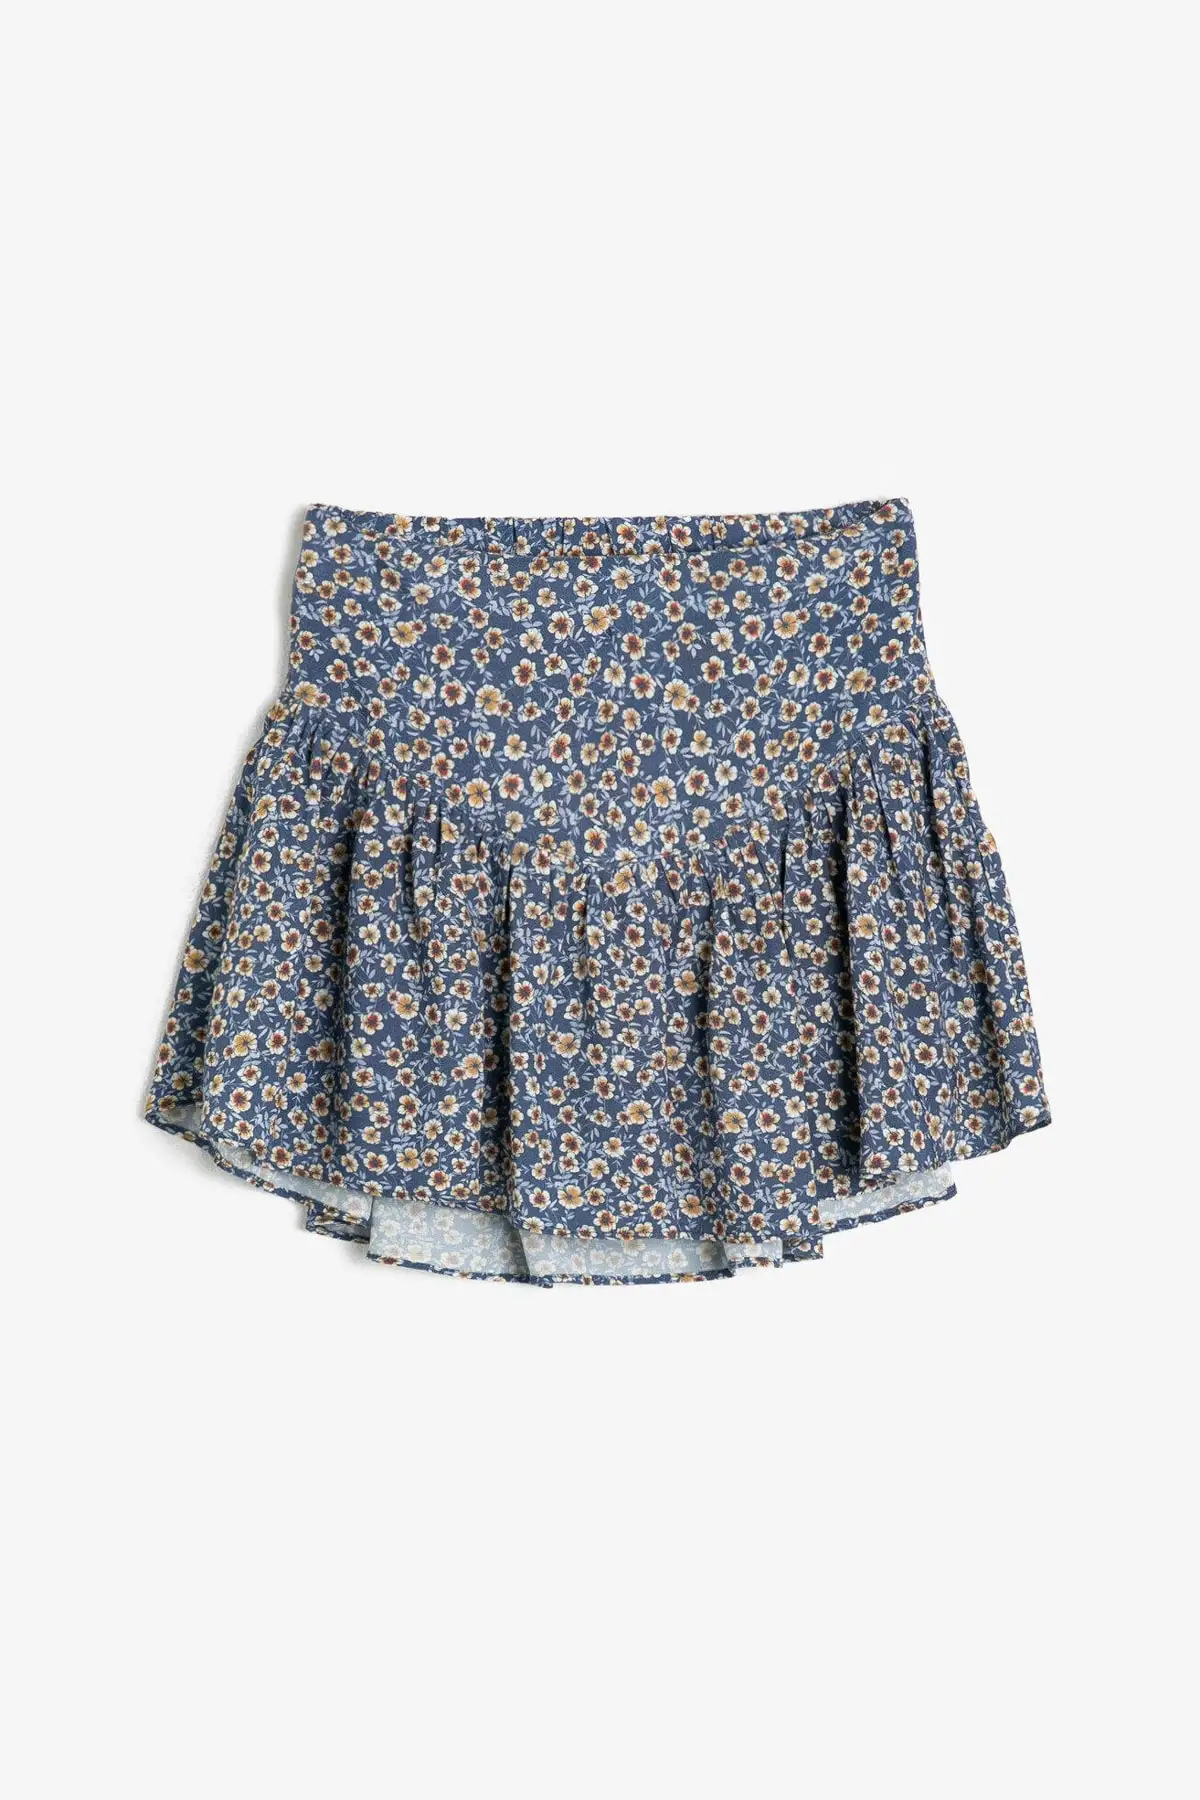 Koton Kids Patterned Skirt|Skirts| - AliExpress